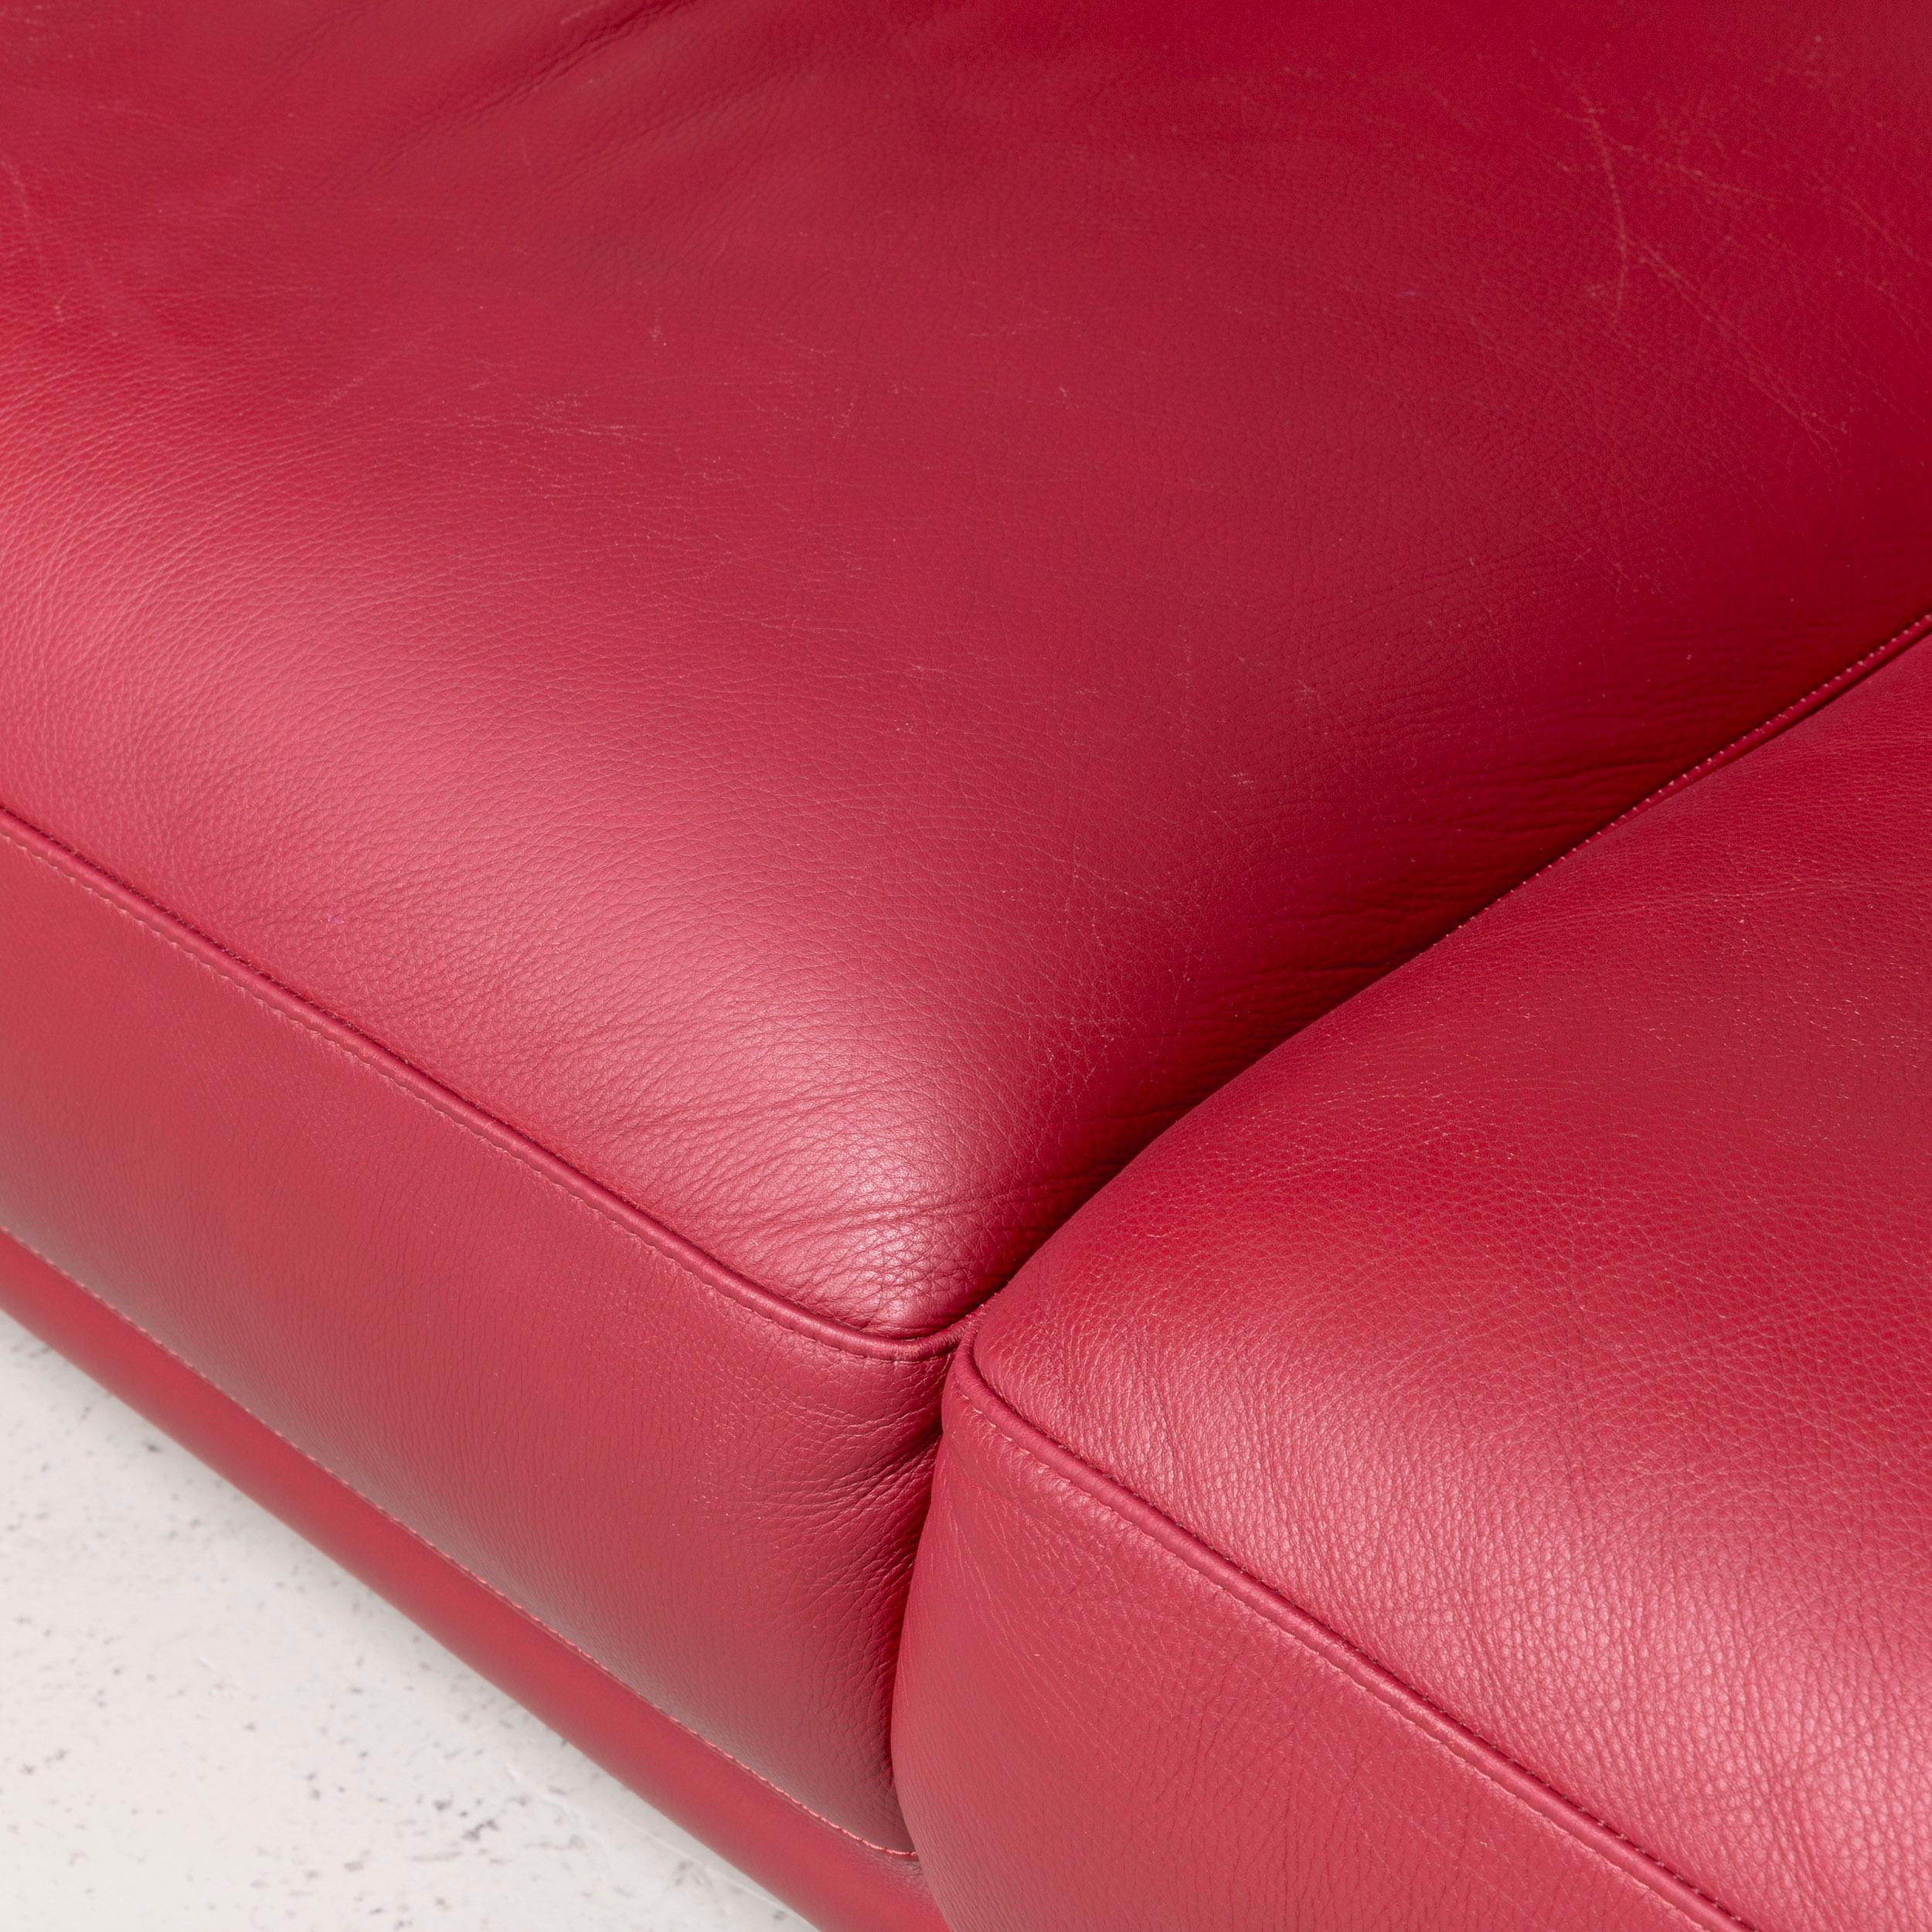 European Natuzzi Designer Leather Sofa red Three-Seat Couch